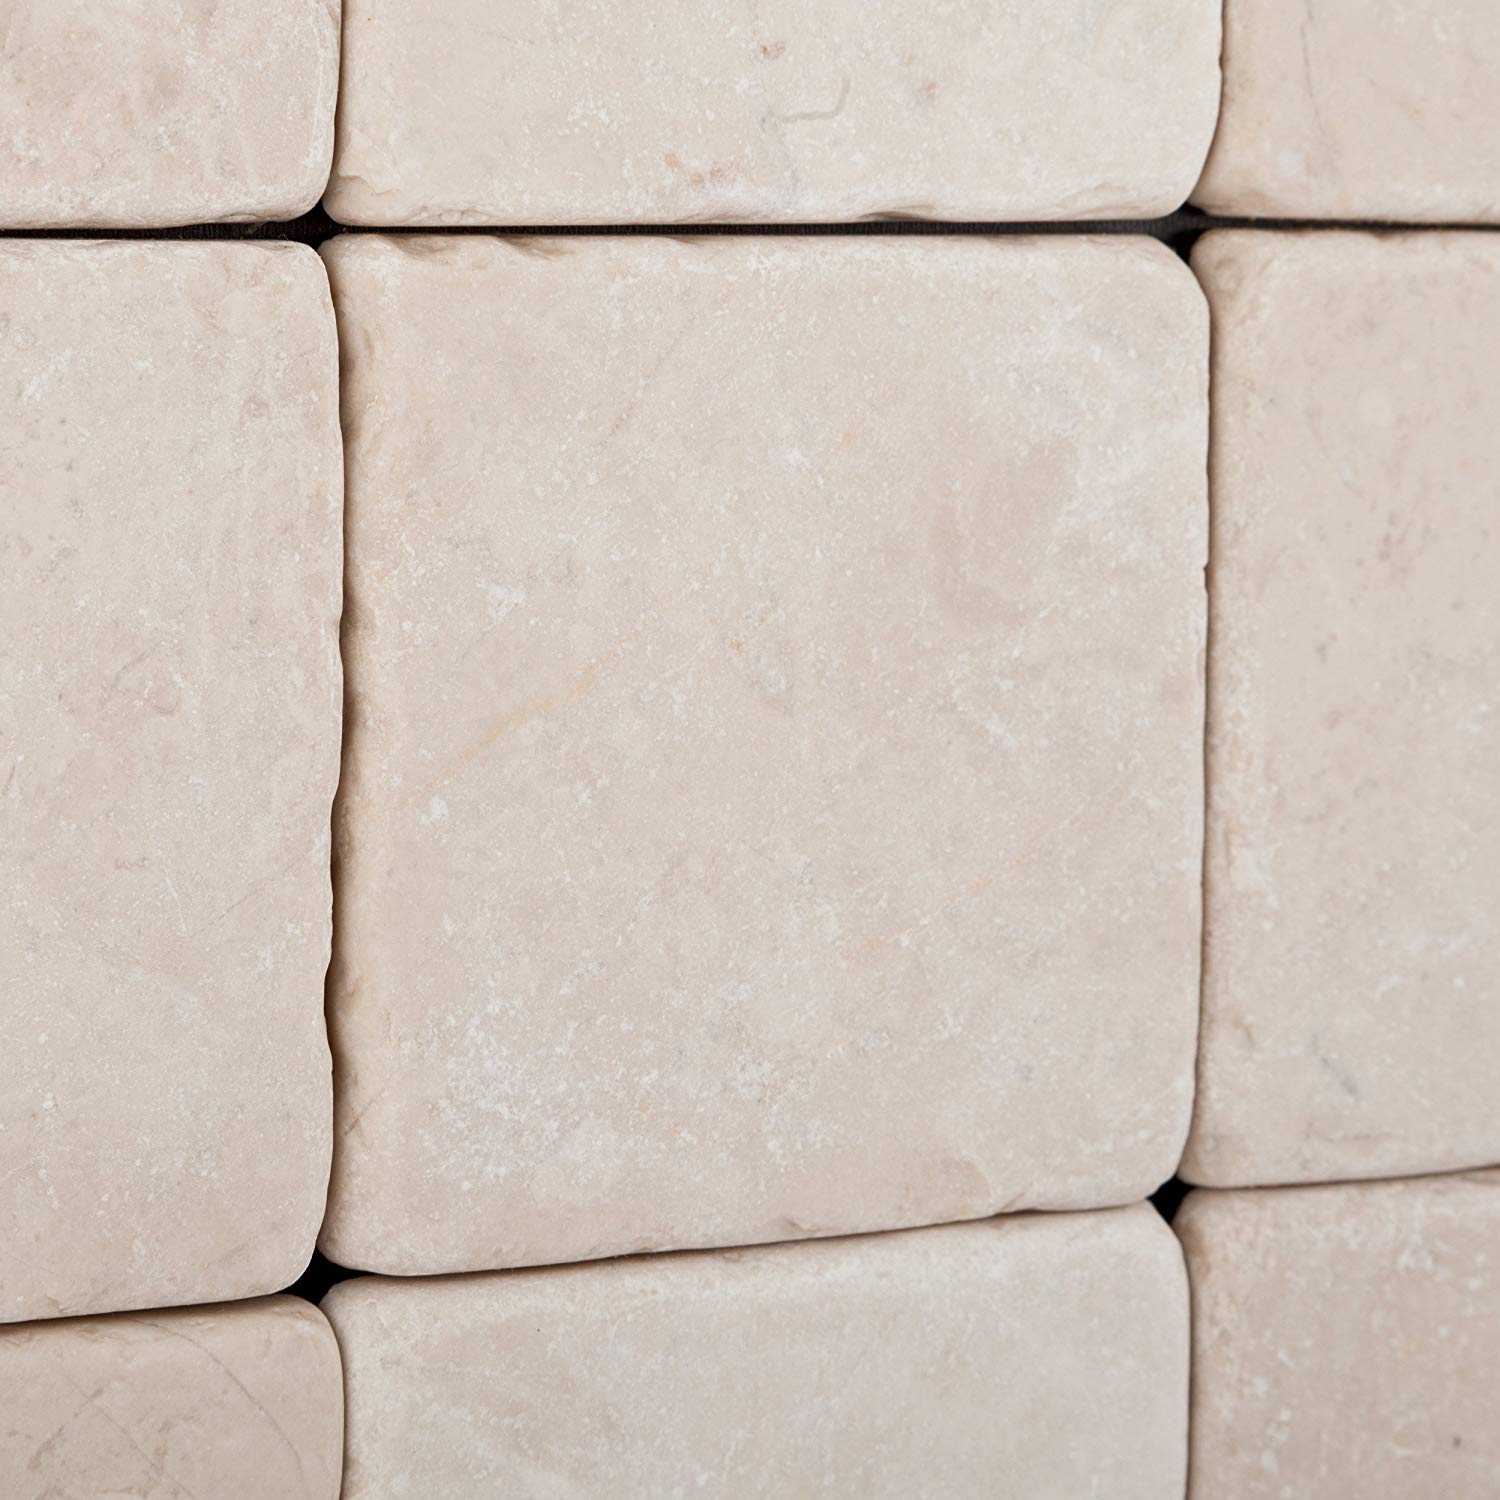 Turkish Crema Marfil Marble 4 X 4 Tumbled Field Tile -